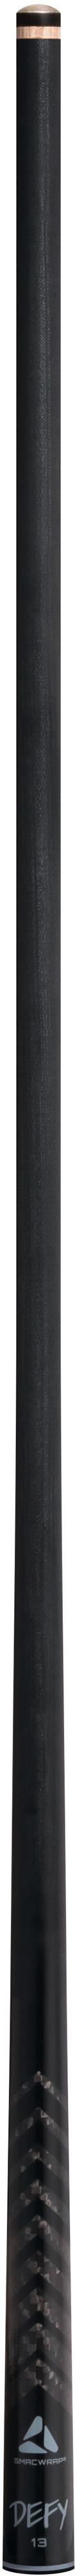 McDermott Defy Carbon Fiber BREAK Shaft - 3/8x10 Joint Pool Cue